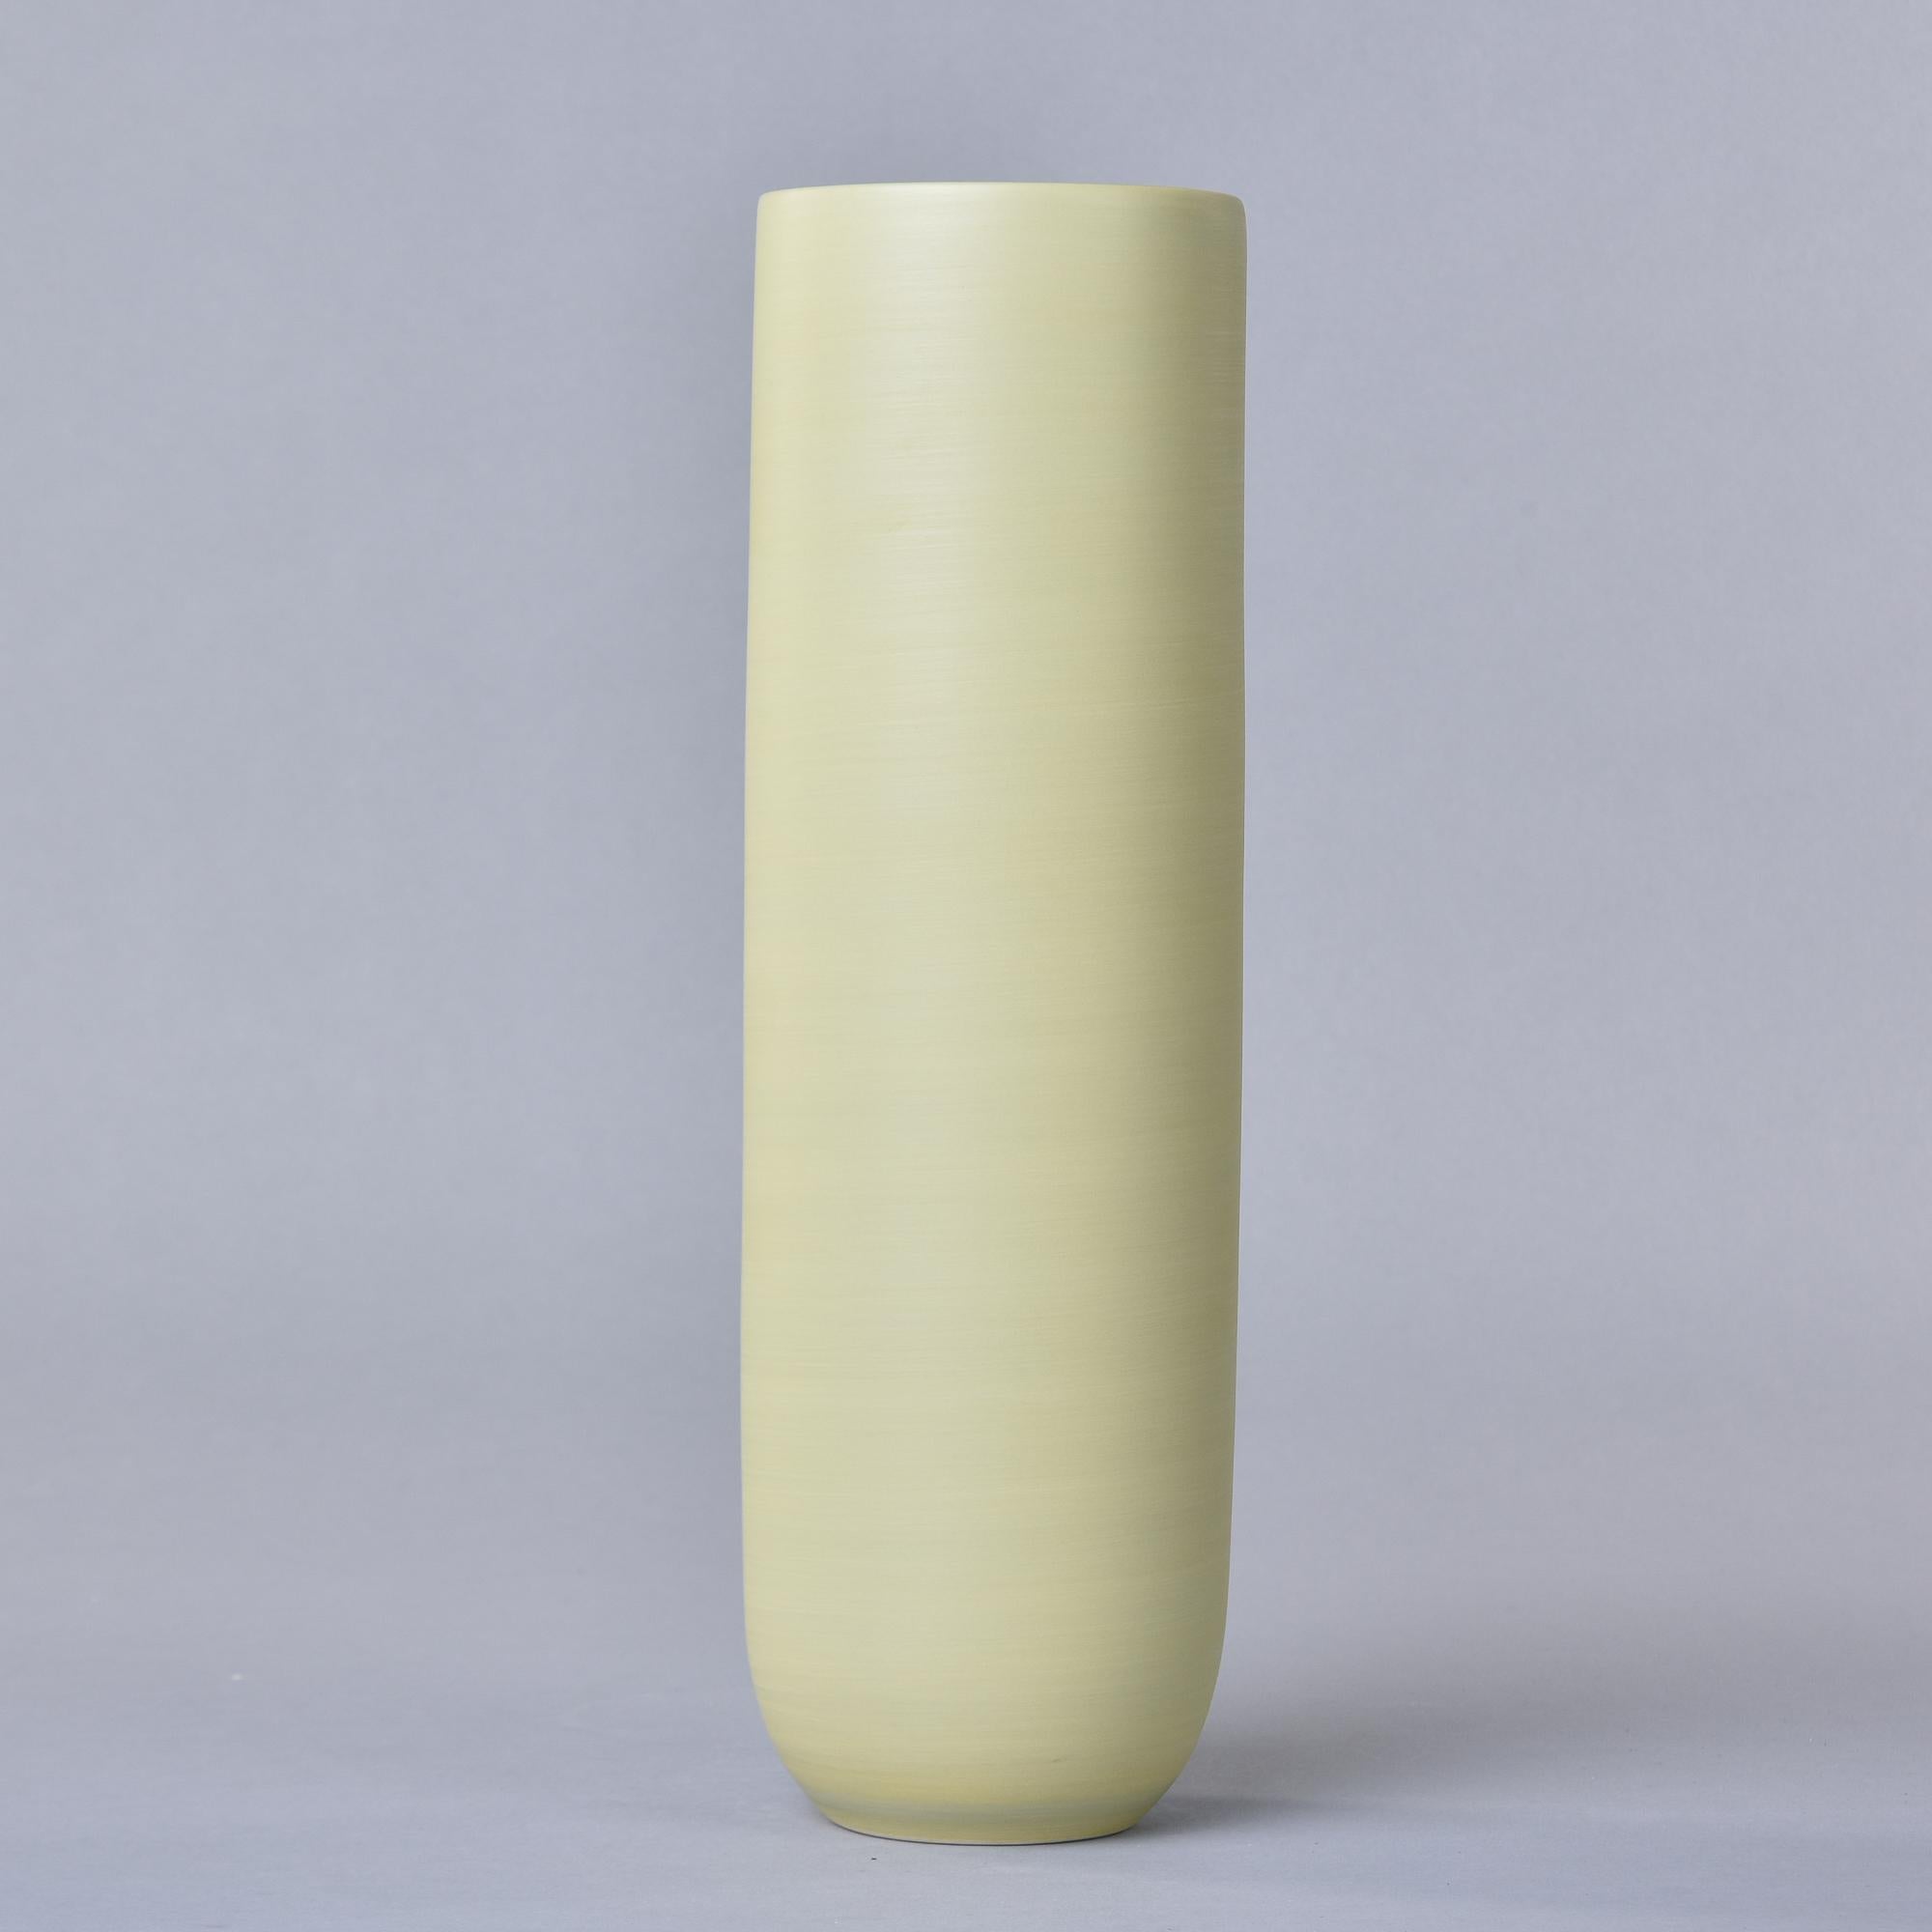 Glazed New Rina Menardi Canna 2 Vase in Pistachio Green For Sale